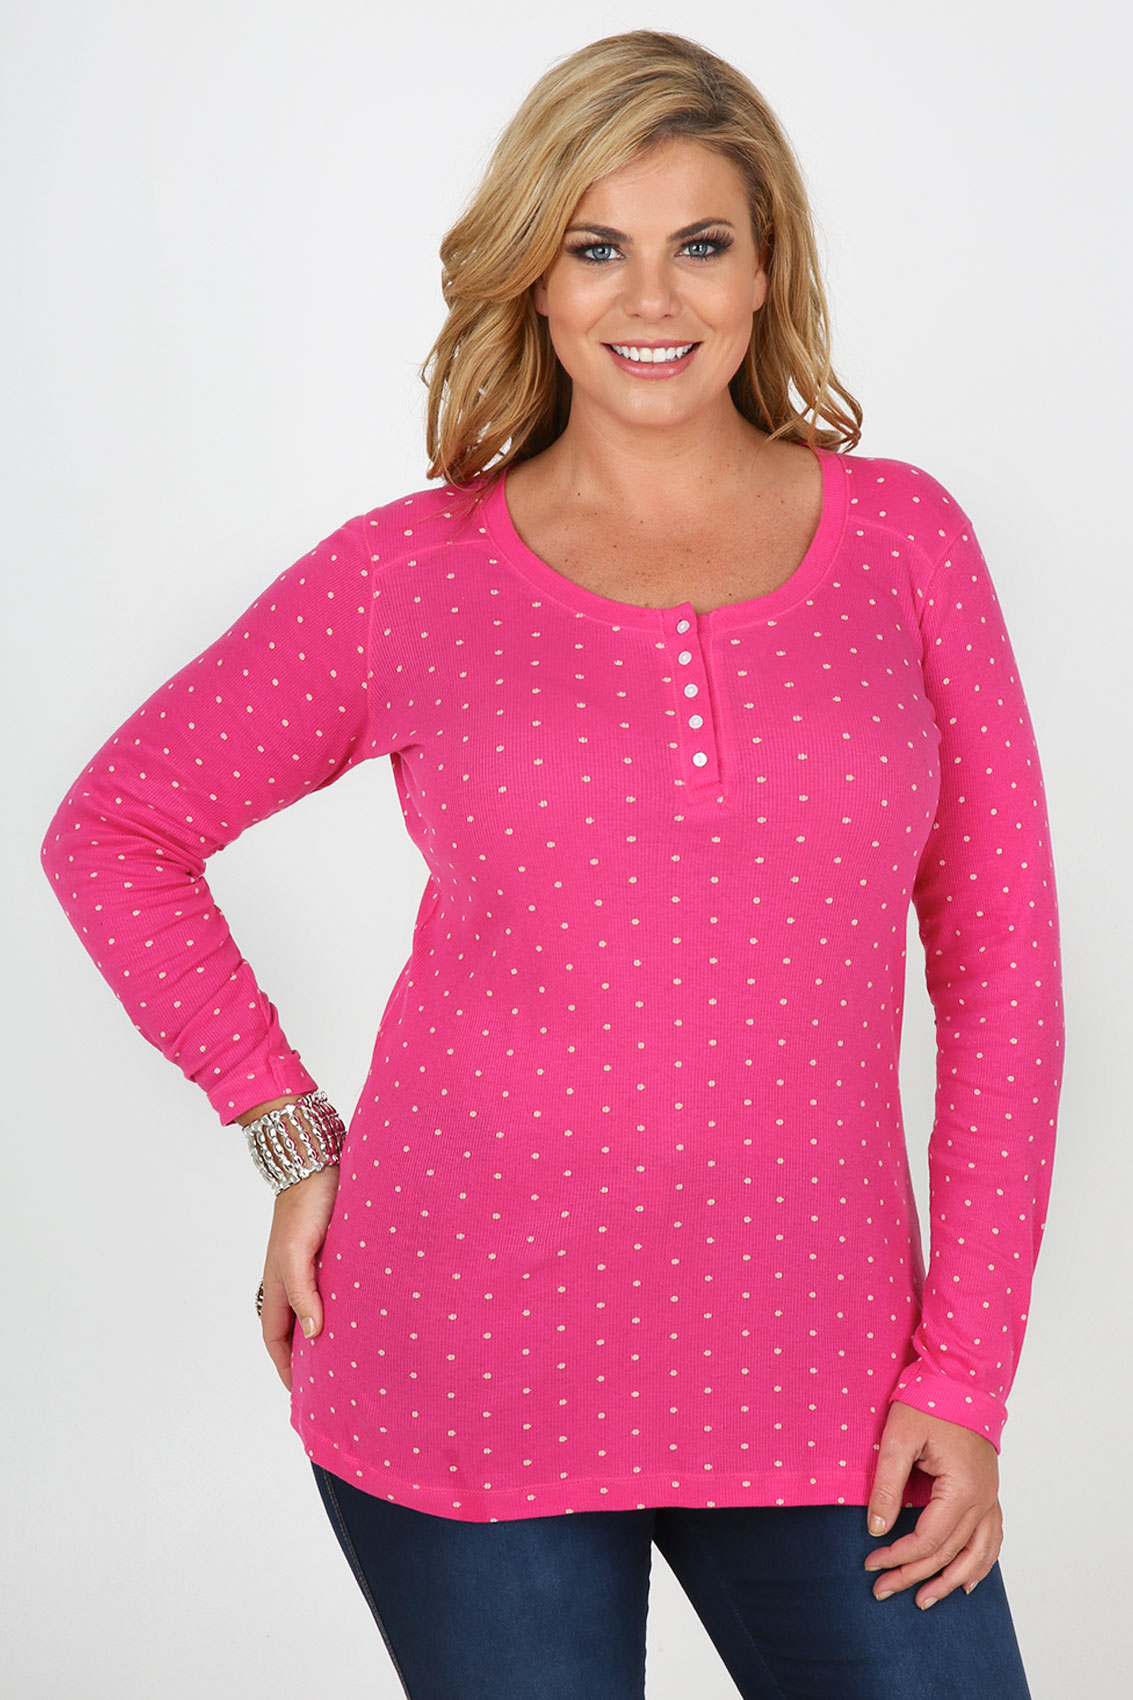 Hot Pink And Ecru Polka Dot Ribbed Long Sleeved T-shirt plus size 16,18